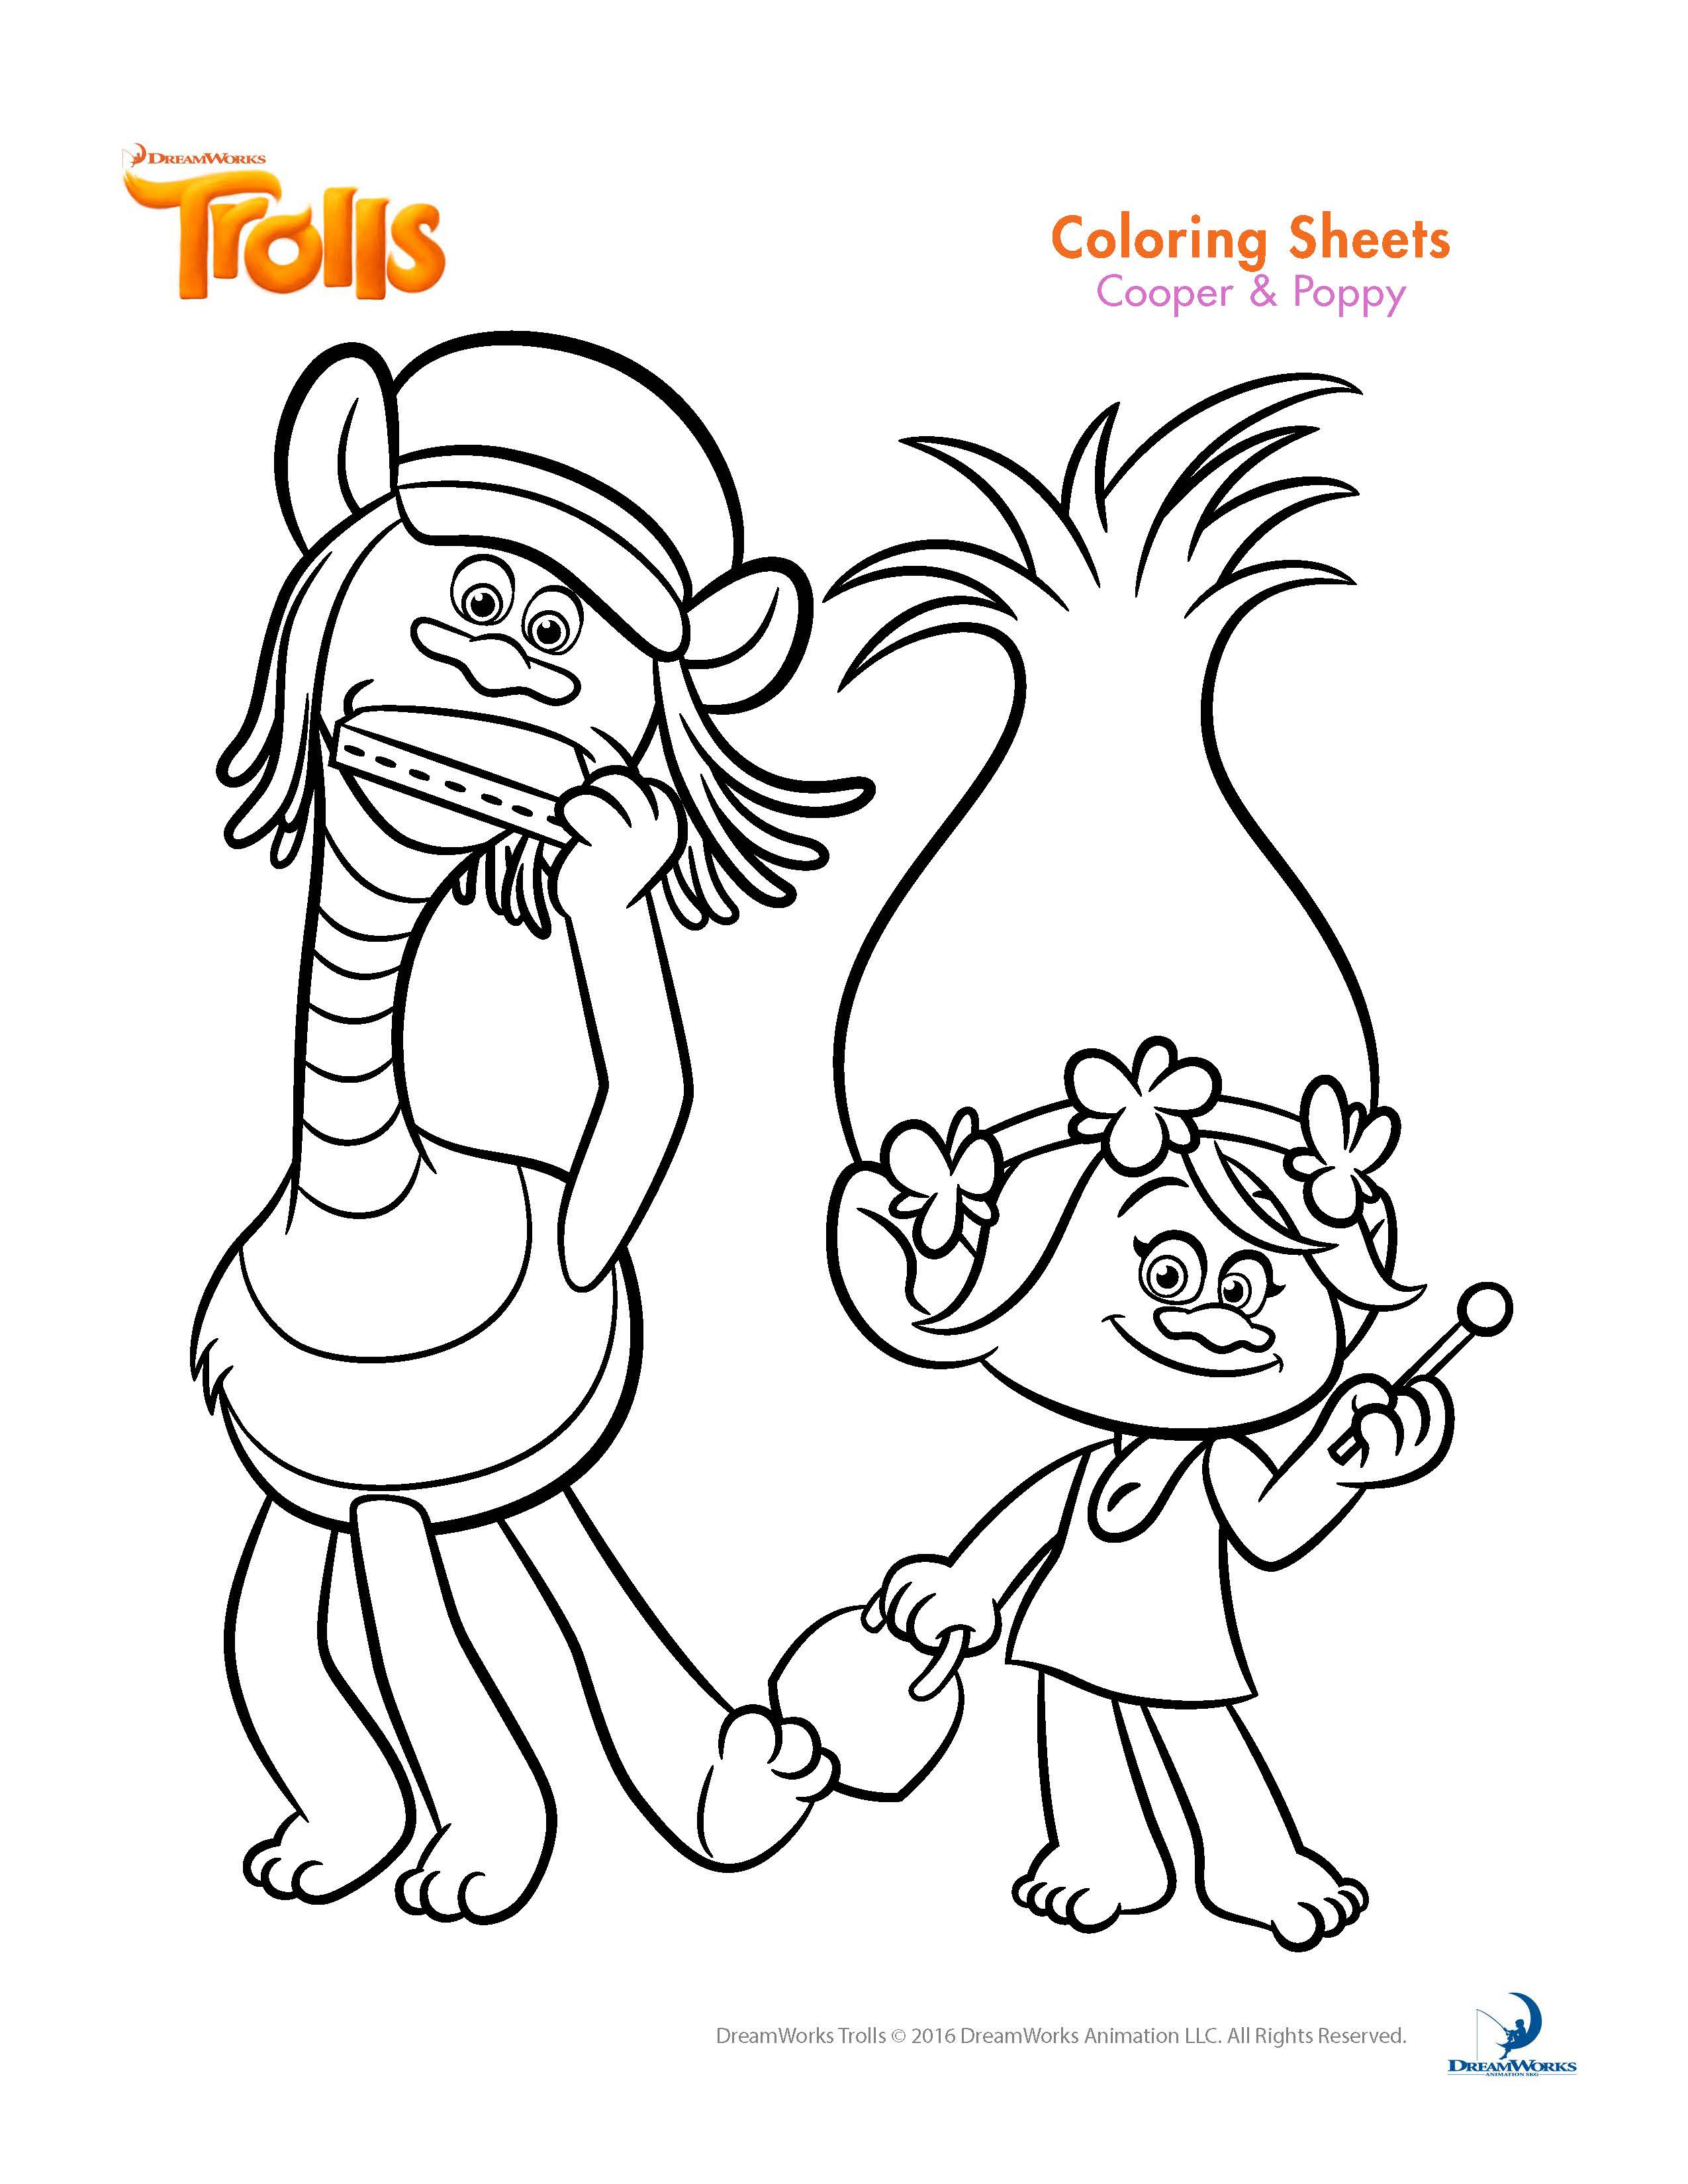 Free Coloring Sheets For Kids Trolls
 Trolls Movie Coloring Pages Best Coloring Pages For Kids